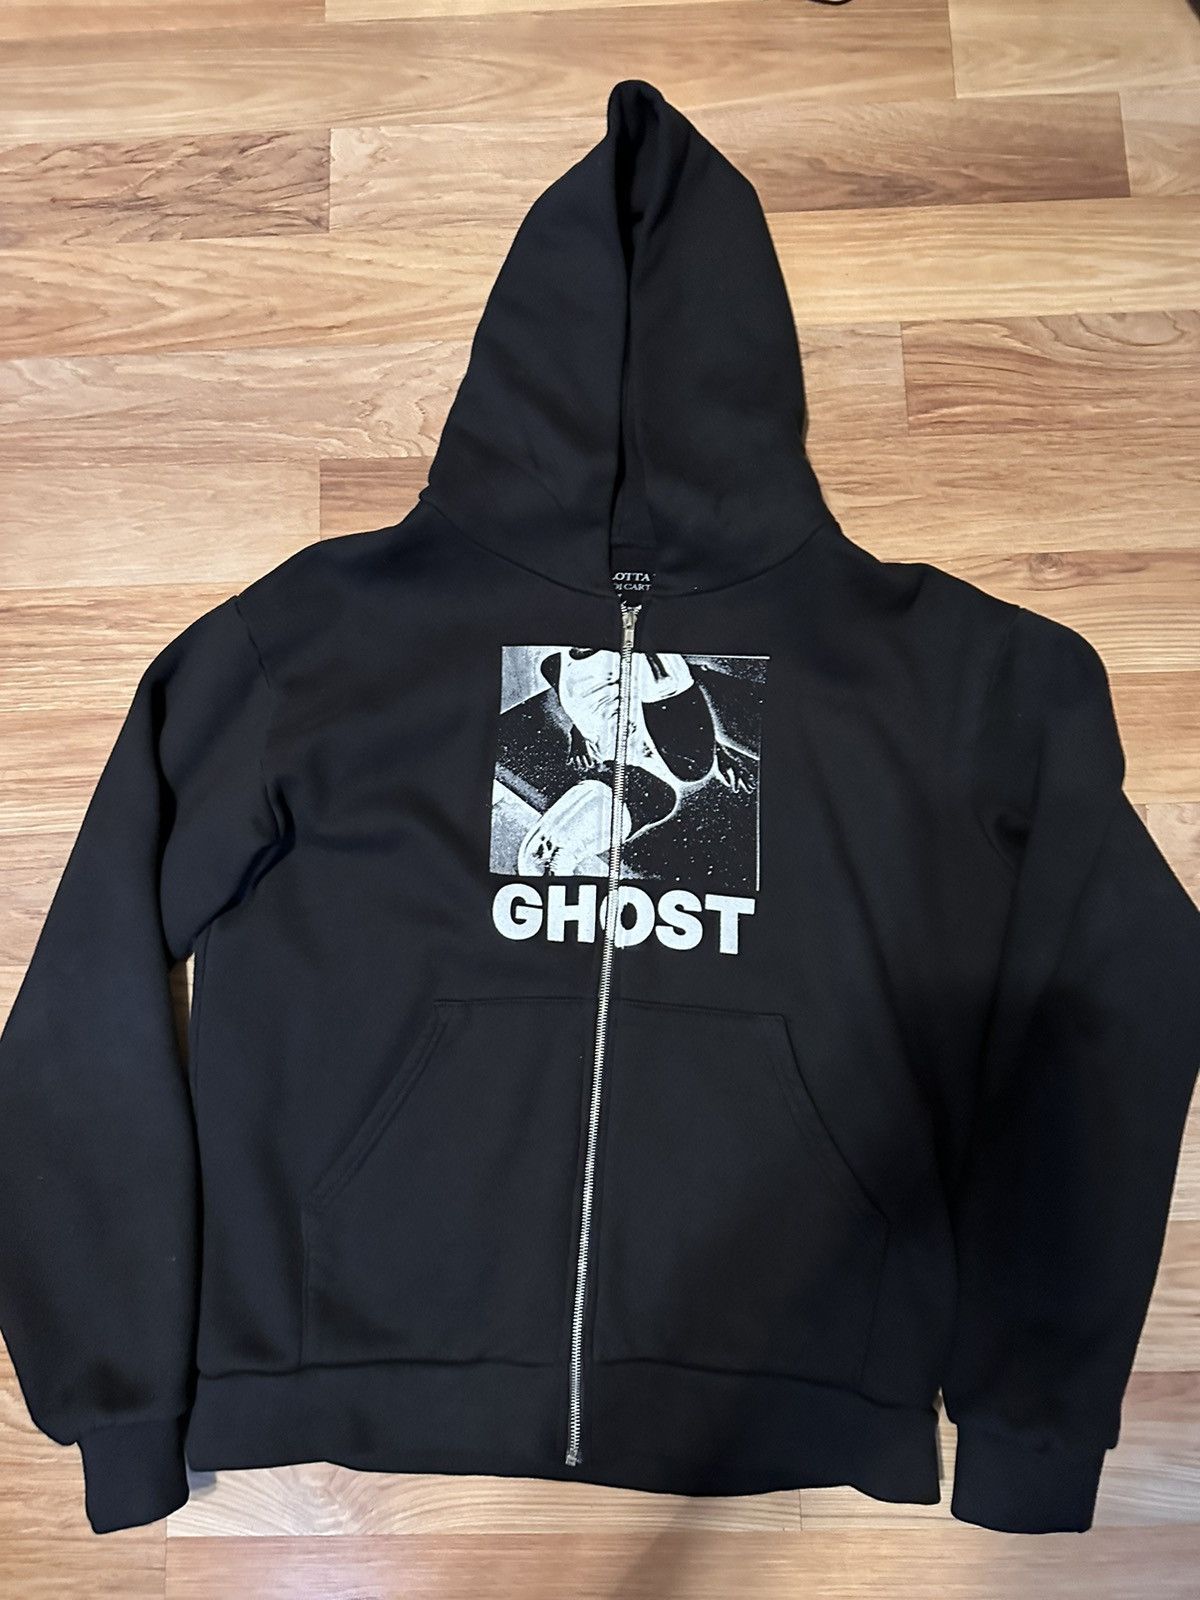 Playboi Carti Playboi Carti Ghost zip up hoodie WLR | Grailed